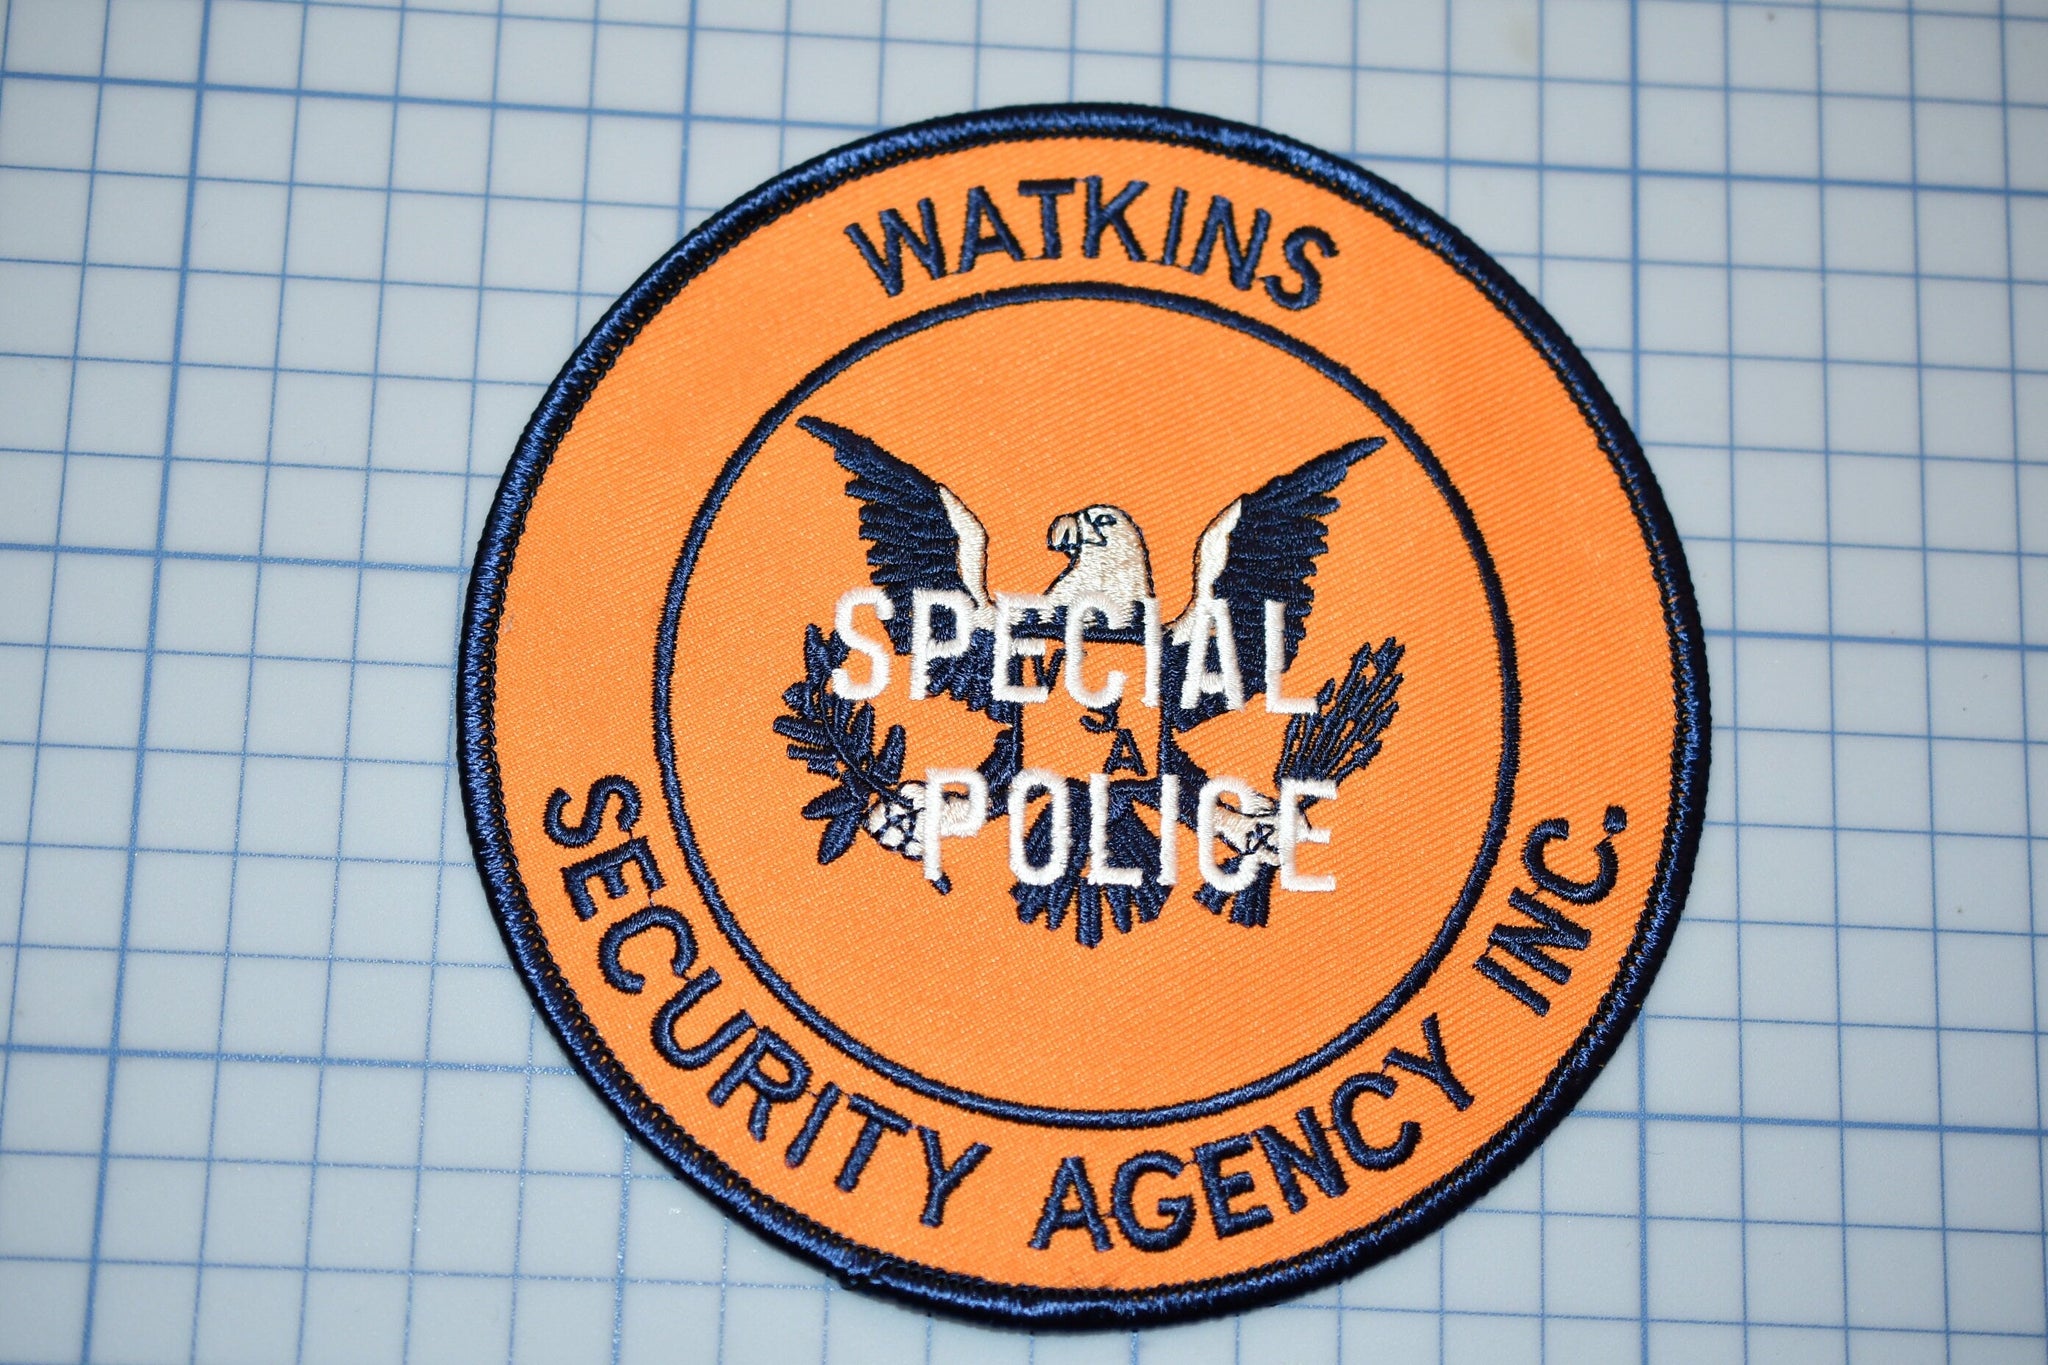 Watkins Security Agency Inc. Maryland Special Police Patch (B27-307)